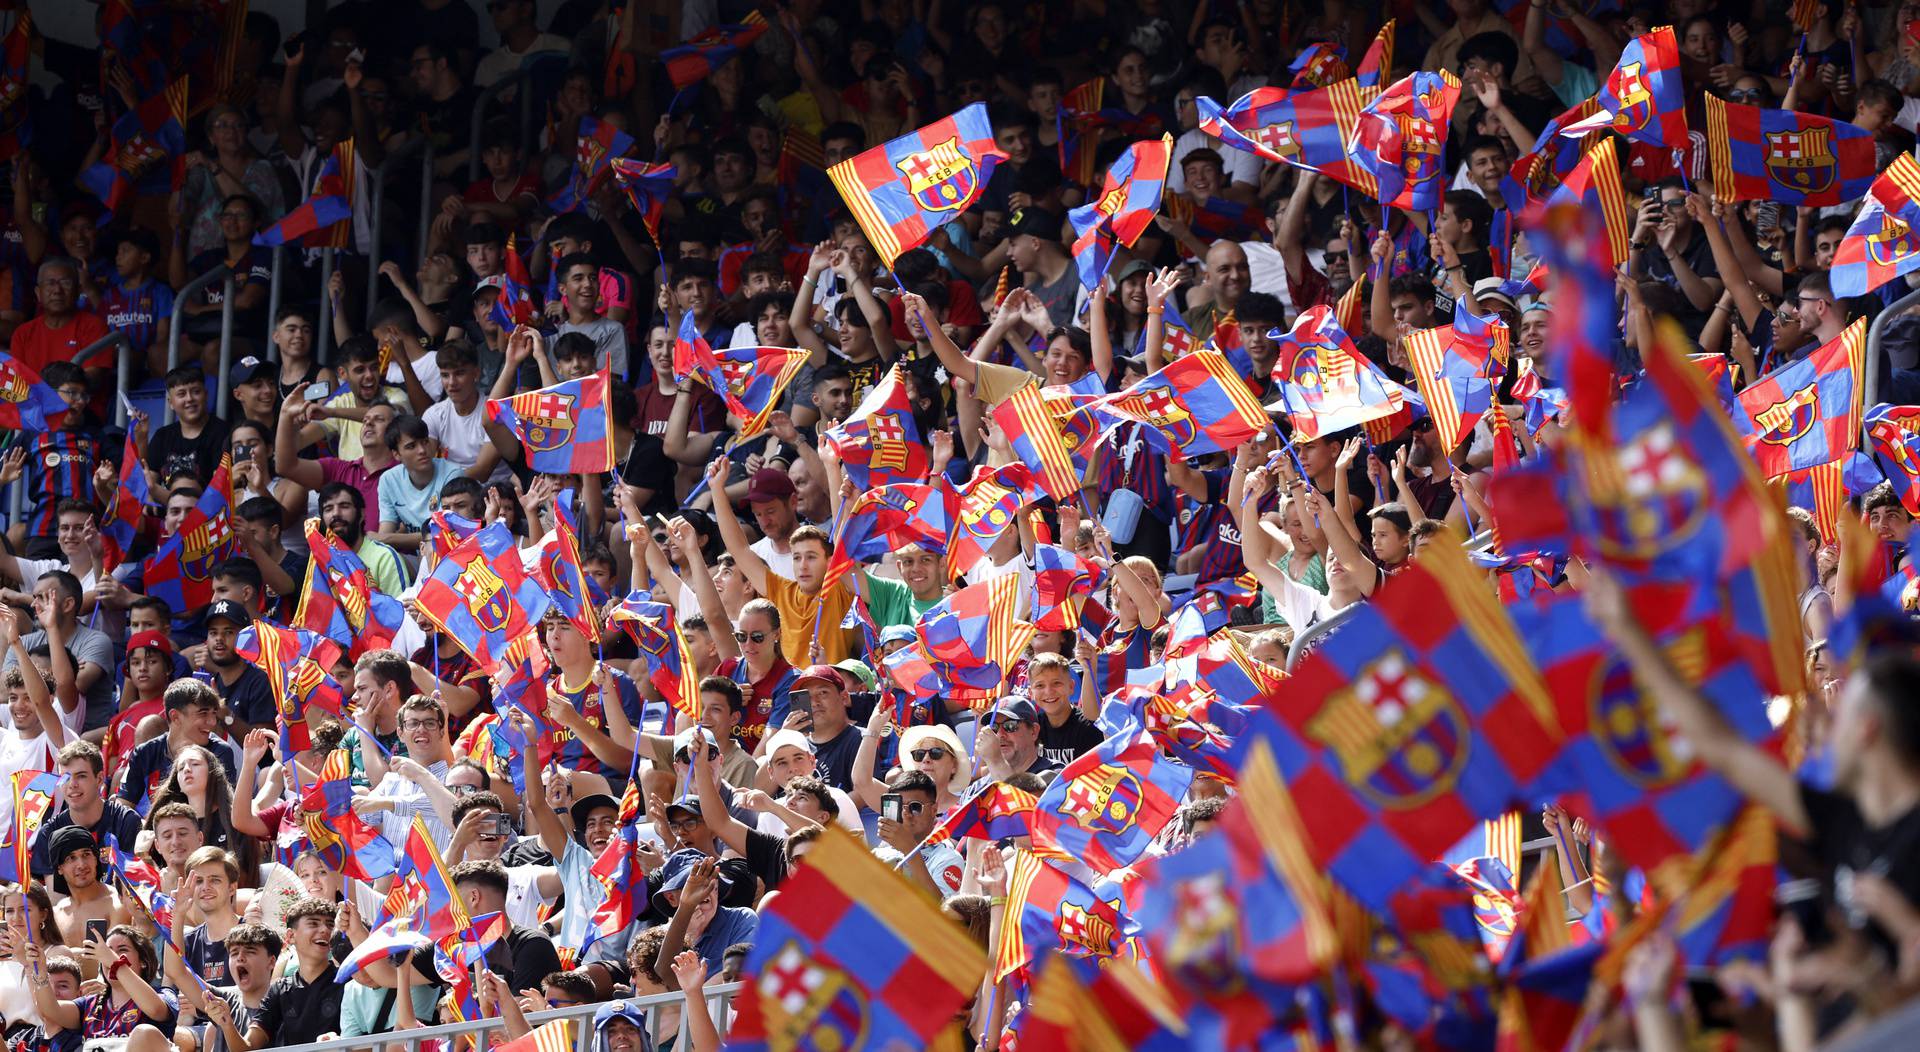 FC Barcelona unveil Robert Lewandowski